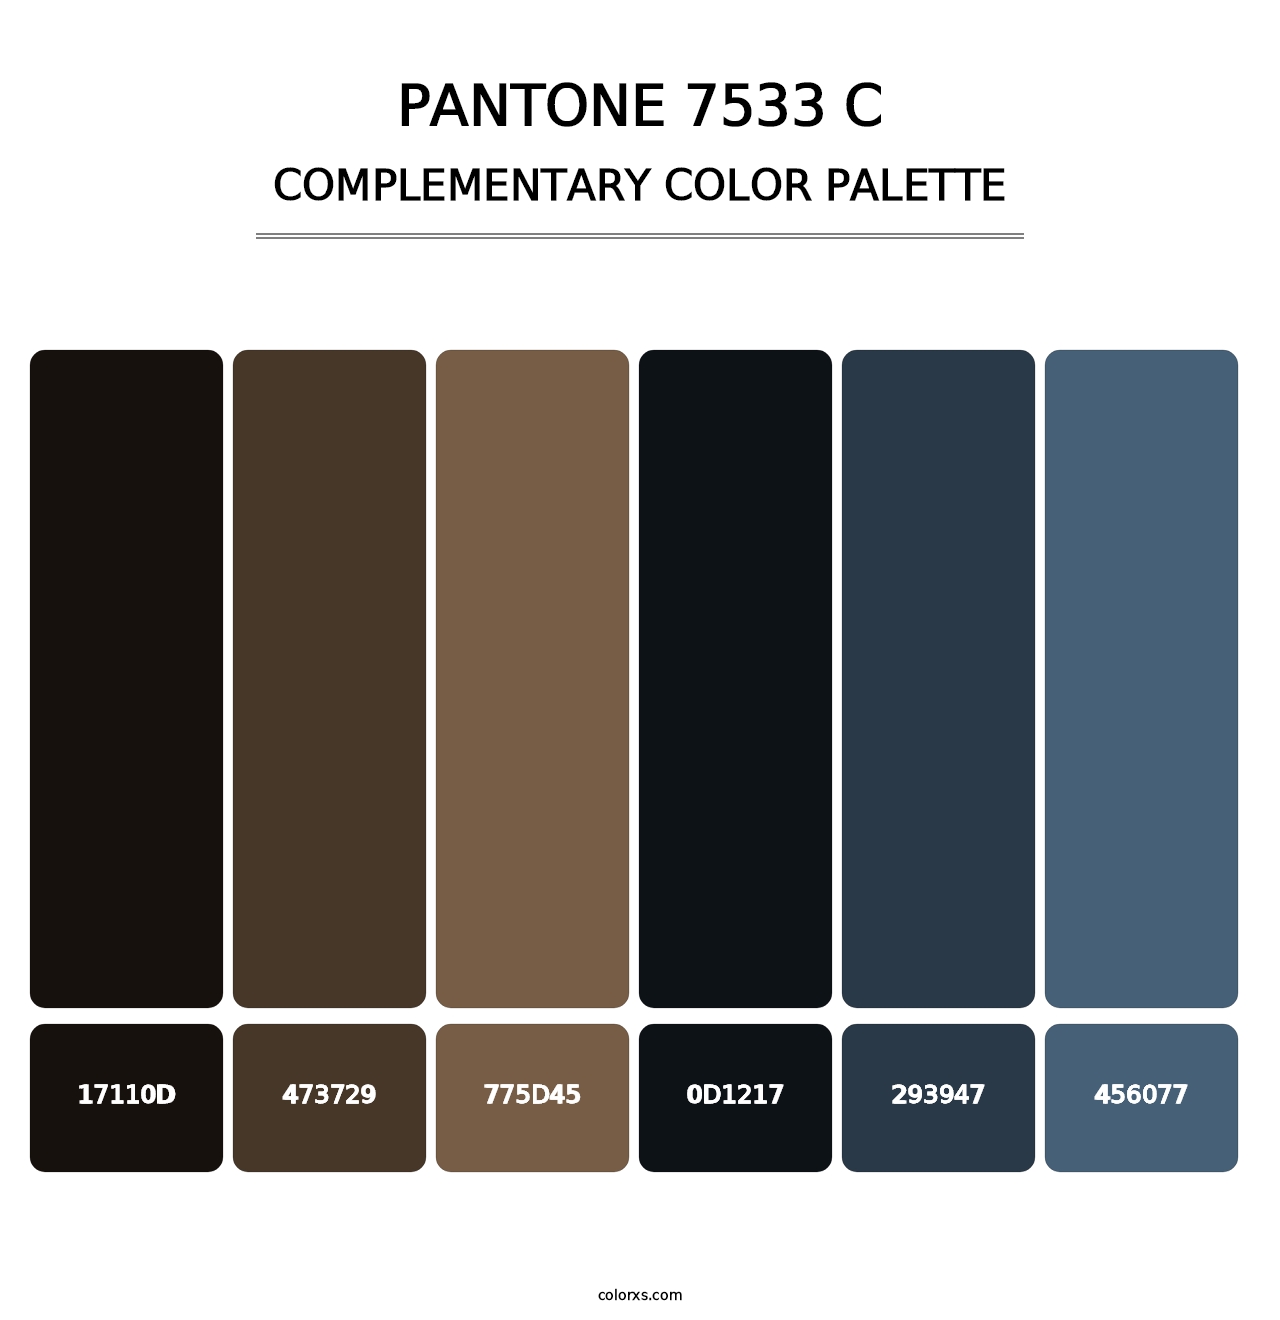 PANTONE 7533 C - Complementary Color Palette